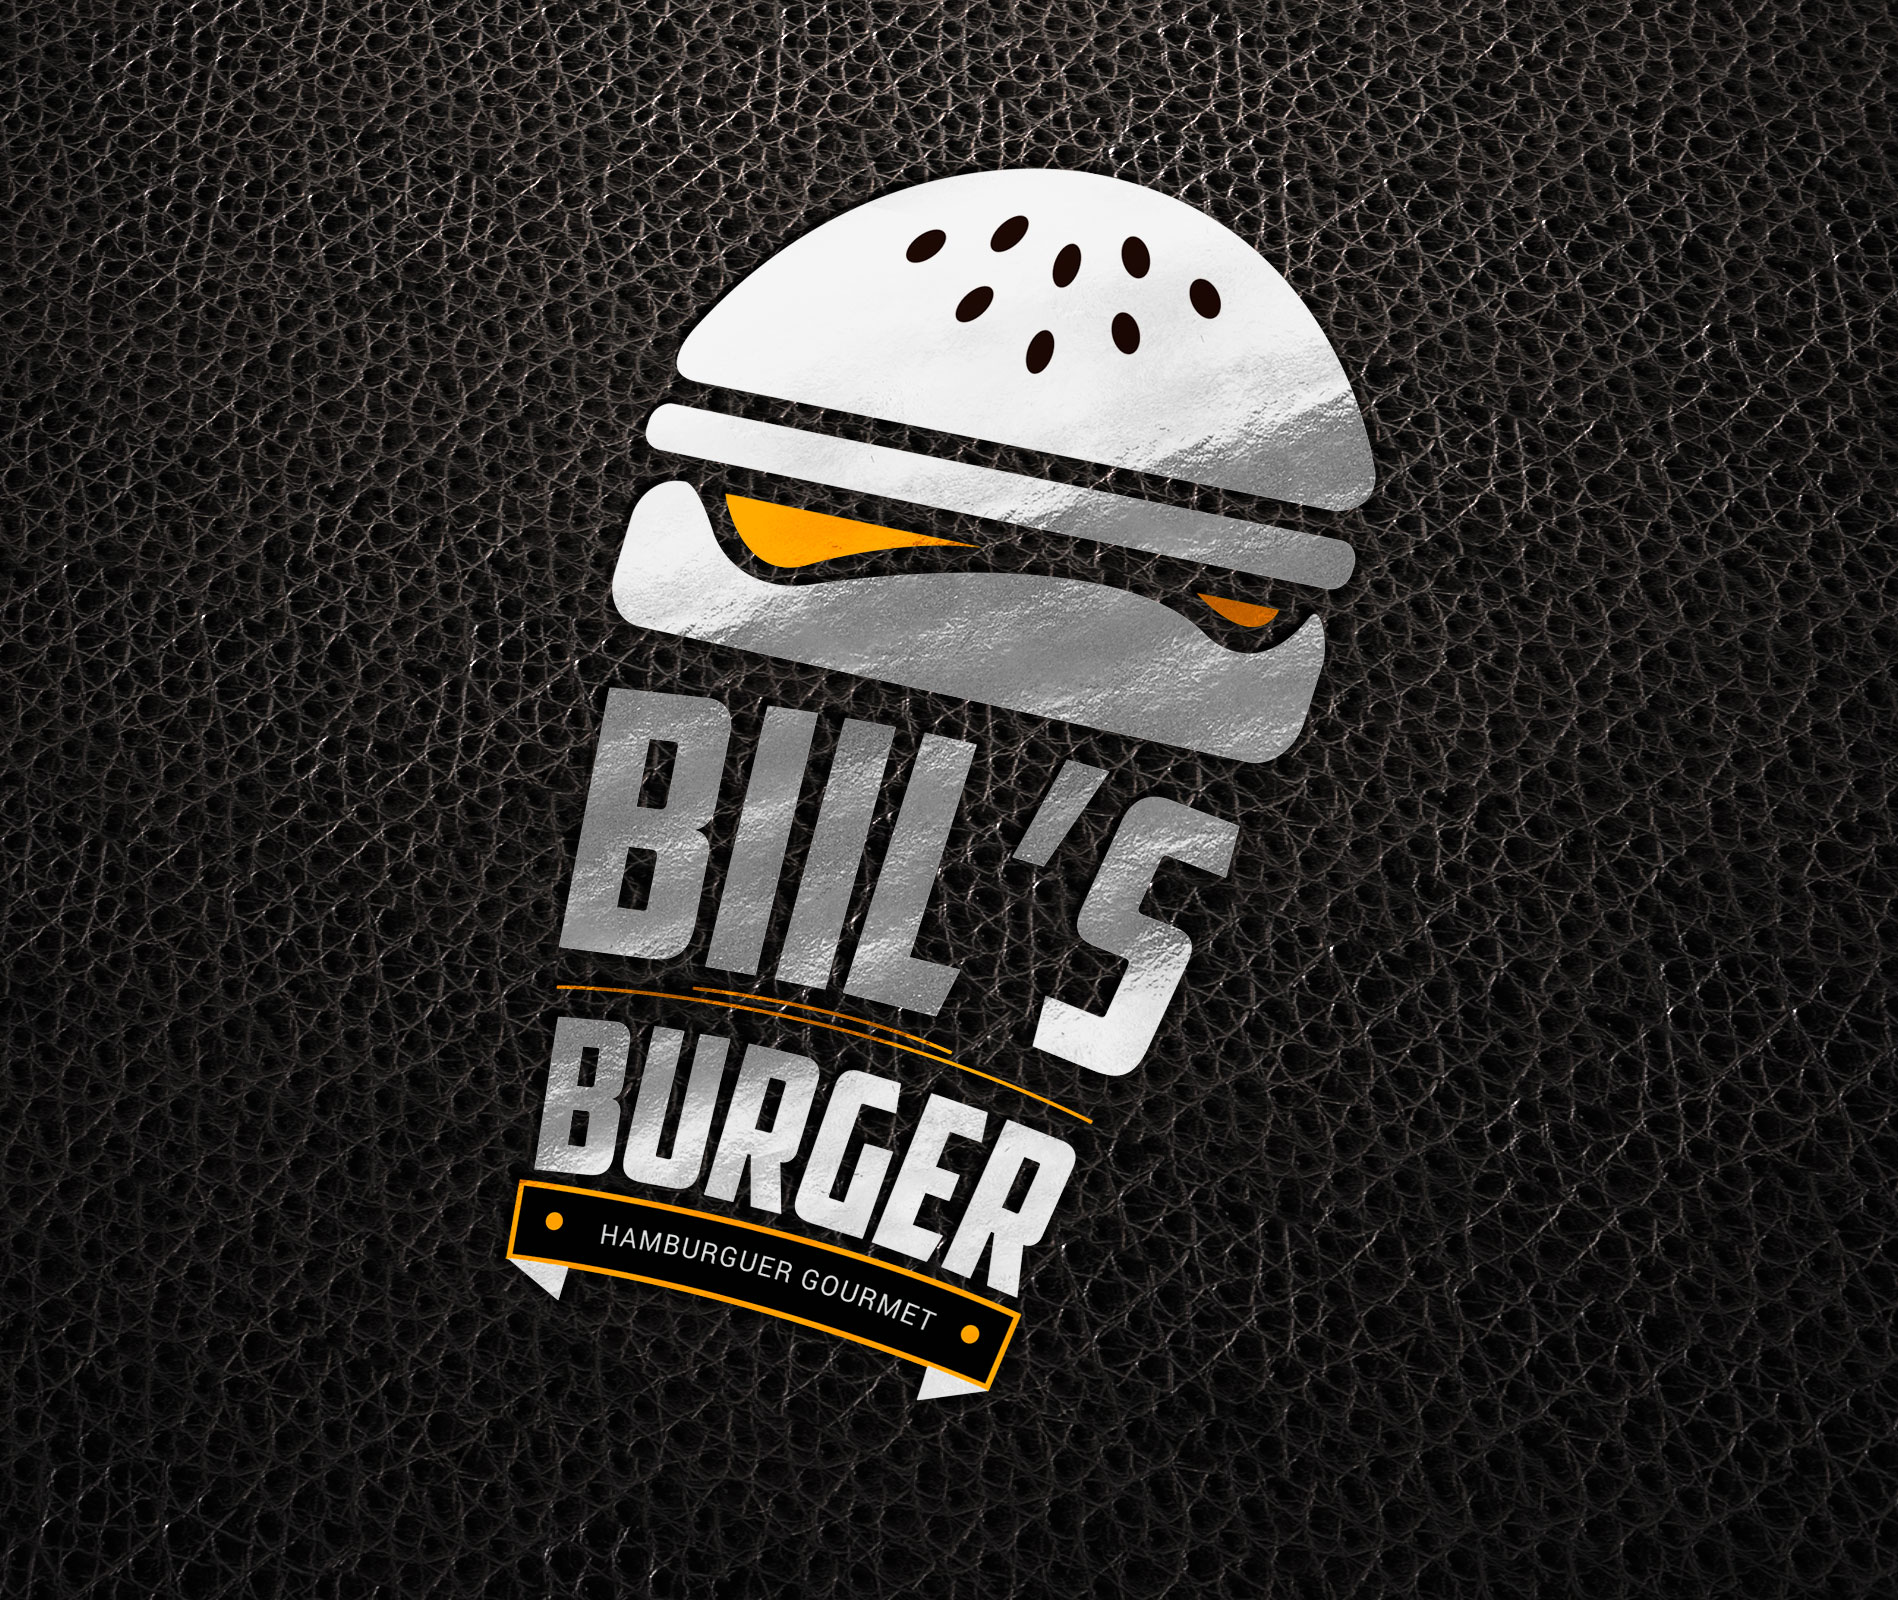 Biils Burger